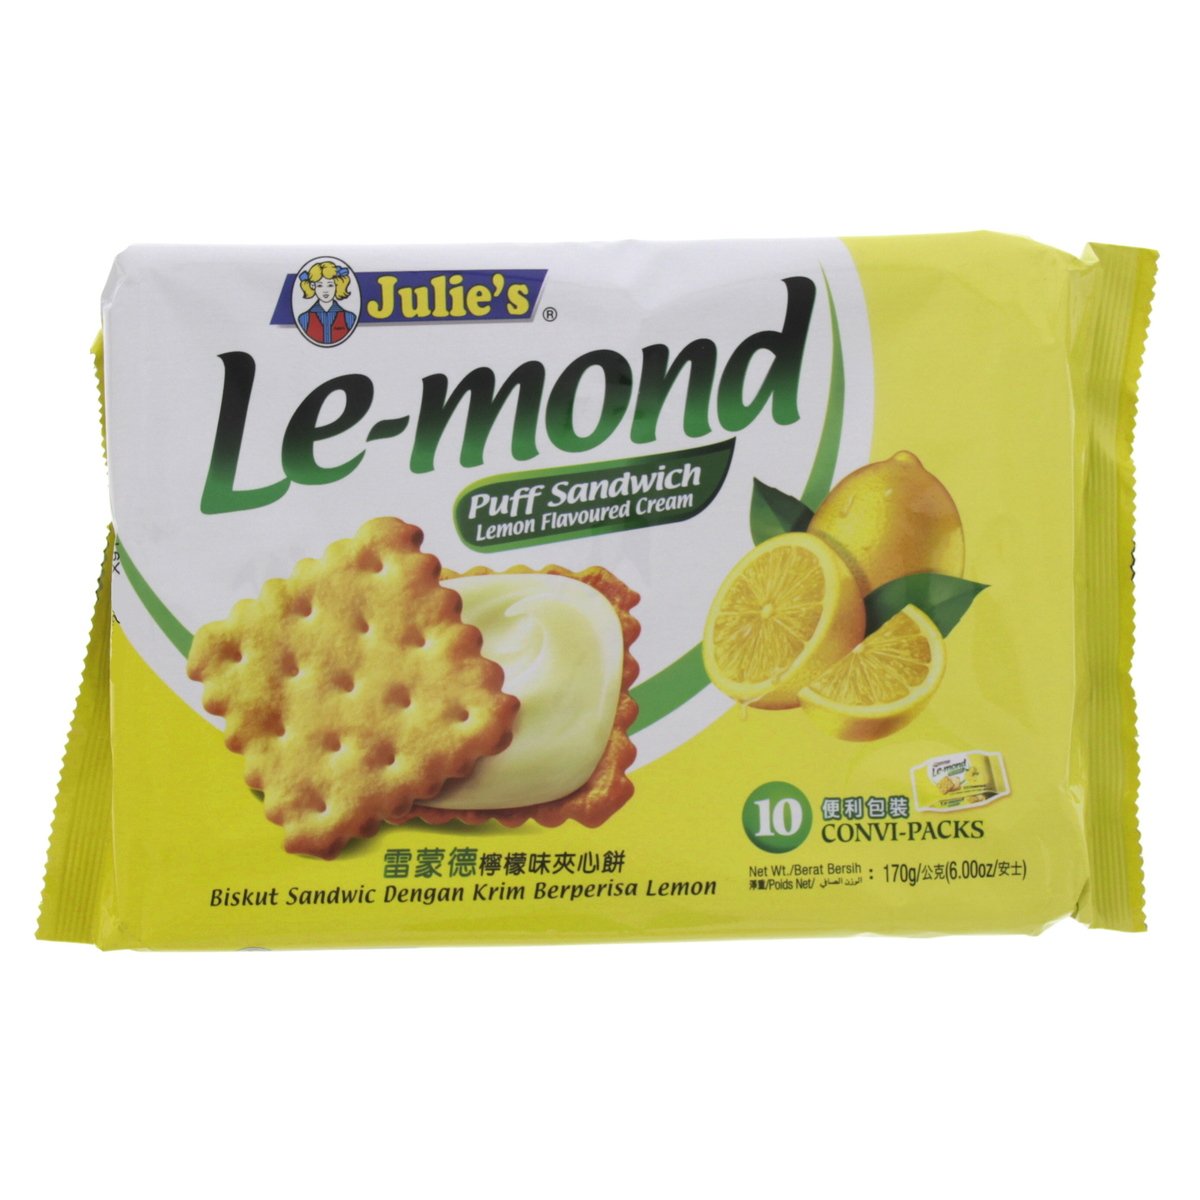 Julie's Le - Mond Puff Sandwich Lemon Flavoured Cream Biscuits 170 g